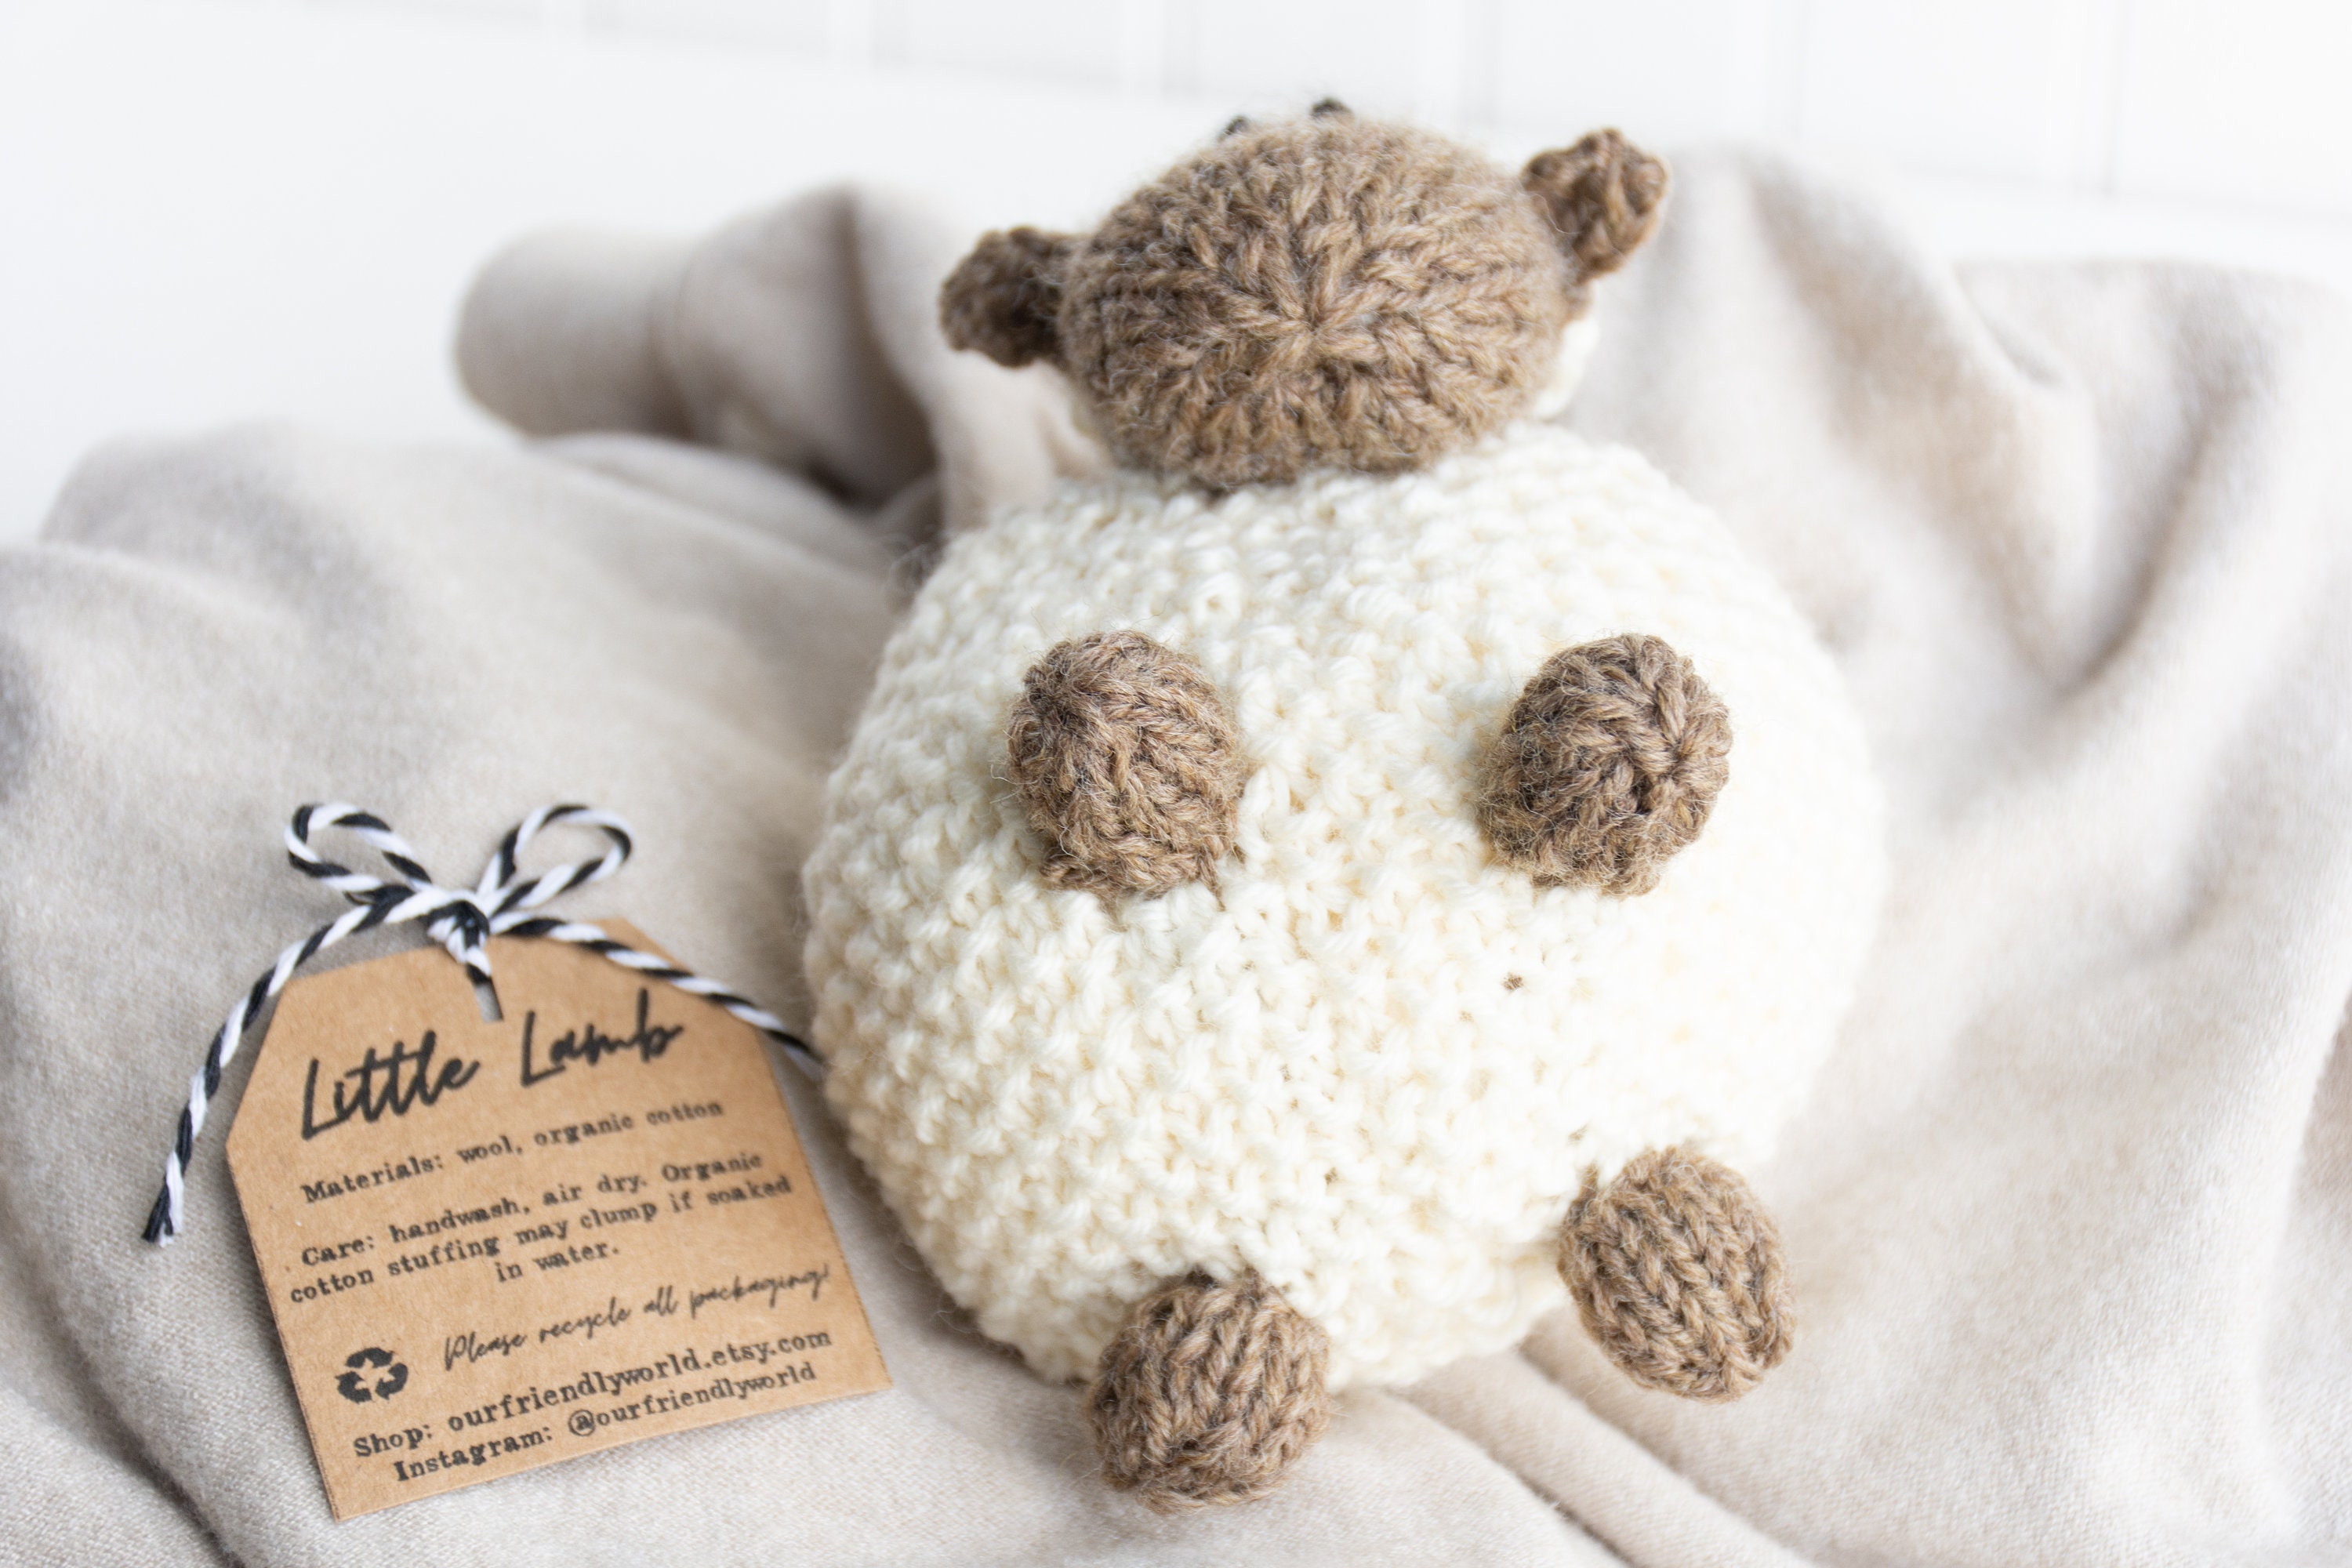 Mushroom Crochet Kit, Mushroom Crochet Pattern, Mushroom Felting Kit, Amigurumi  Kit, DIY Crochet Kit, Ecofriendly Crafts, Sustainable Gifts 